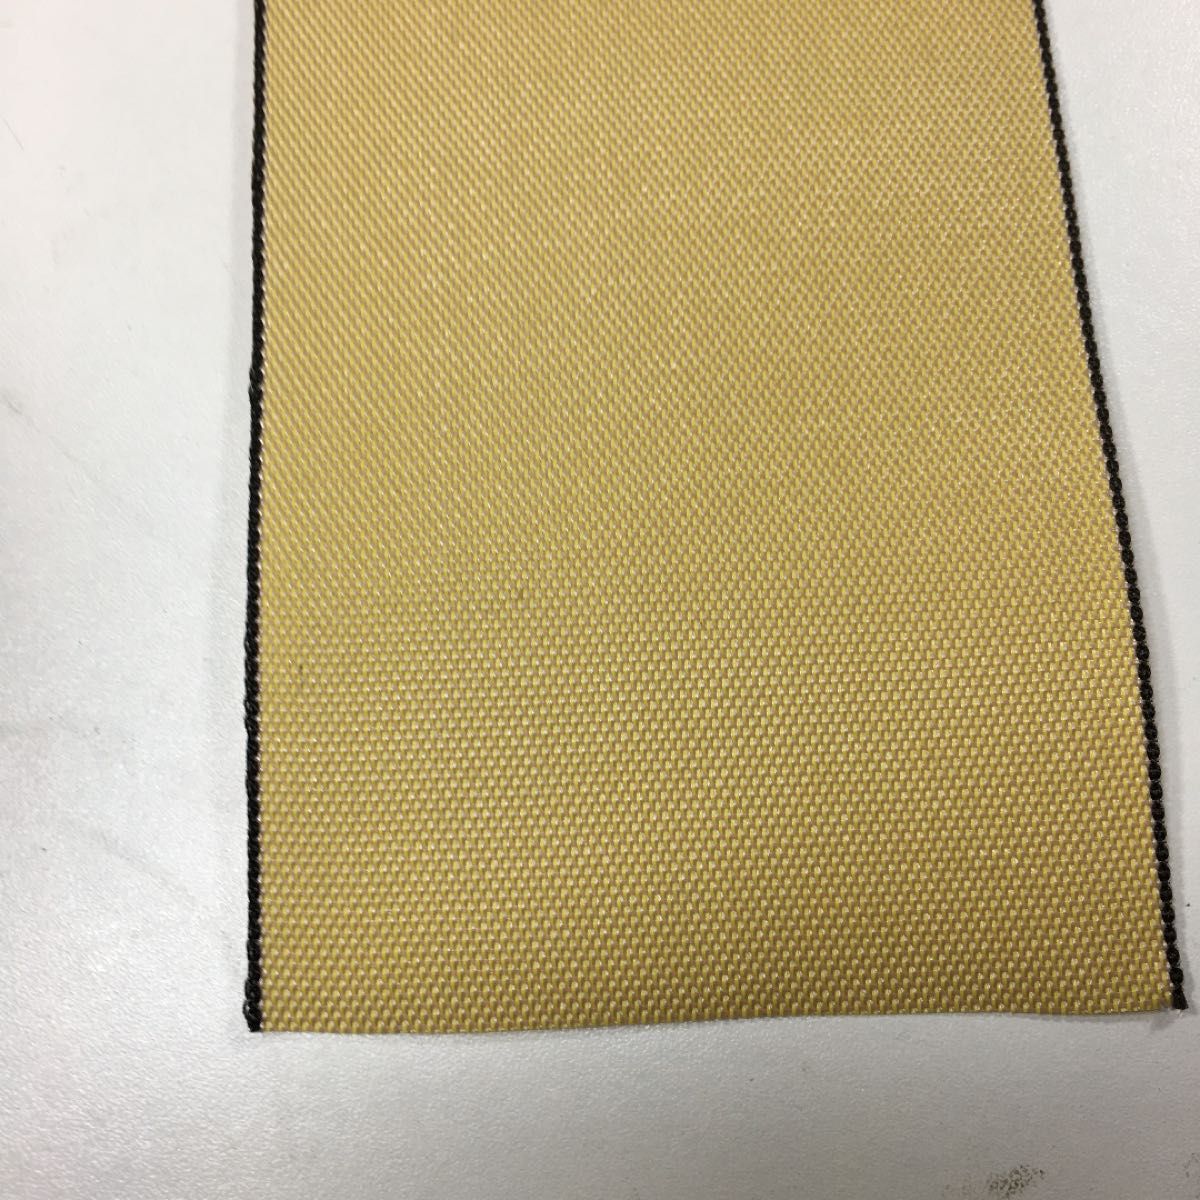 S-02 黄金色黄色系イエロー5m畳へり畳ヘリ畳縁畳のヘリハンドメイド生地リボン小物作り手作りお守りリメイクバッグ